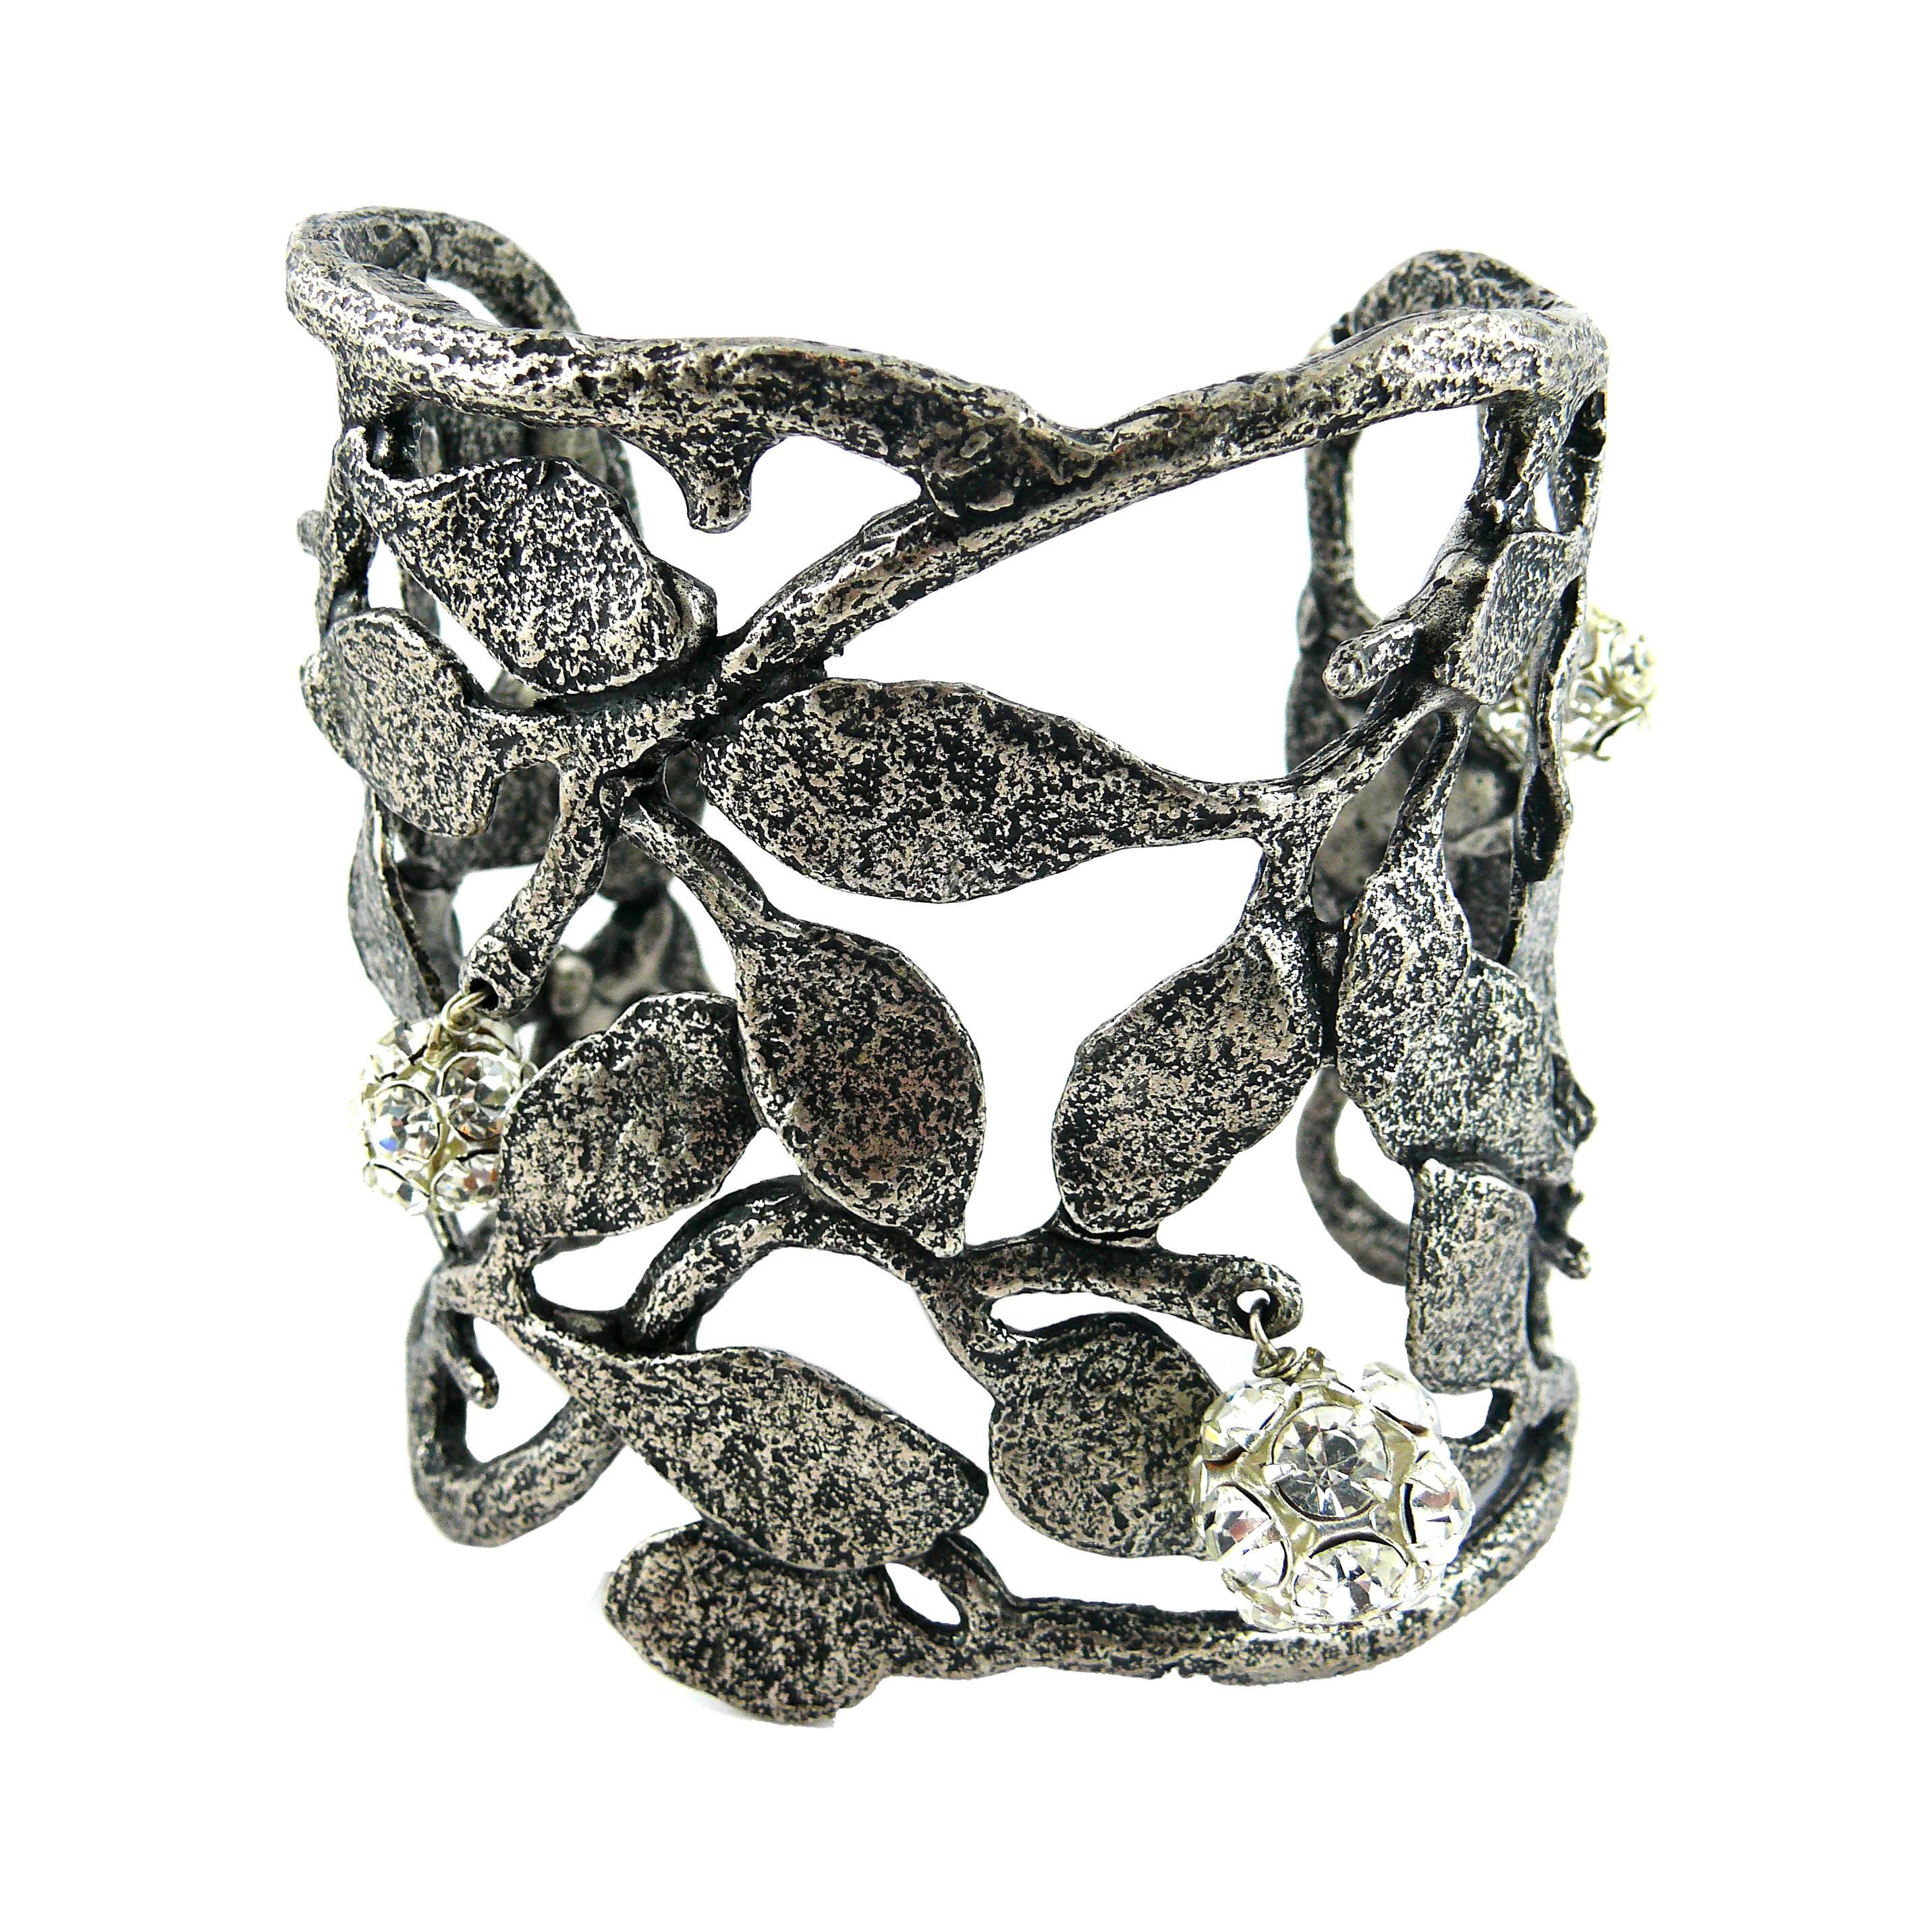 Patrick Retif Vintage Rare Sculptural Foliage Cuff Bracelet